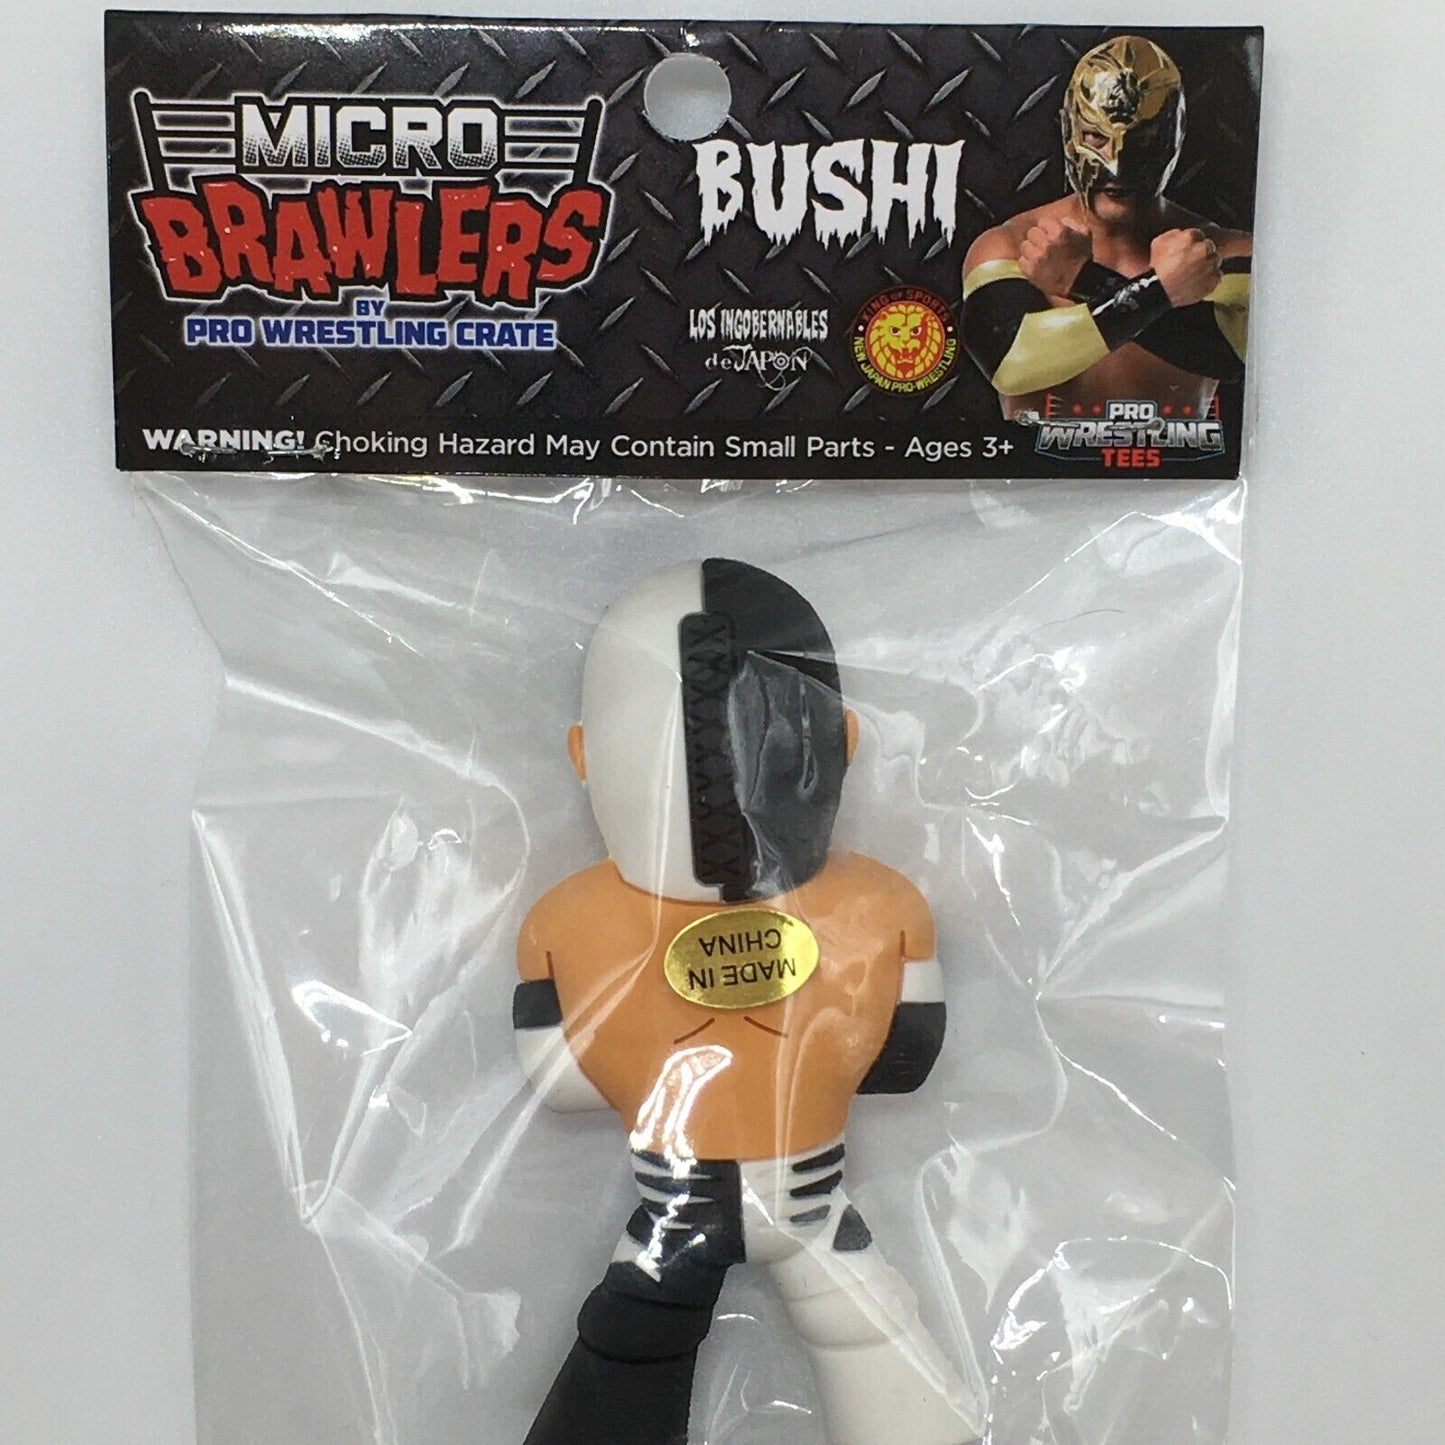 2019 Pro Wrestling Tees Micro Brawlers Series 2 Bushi